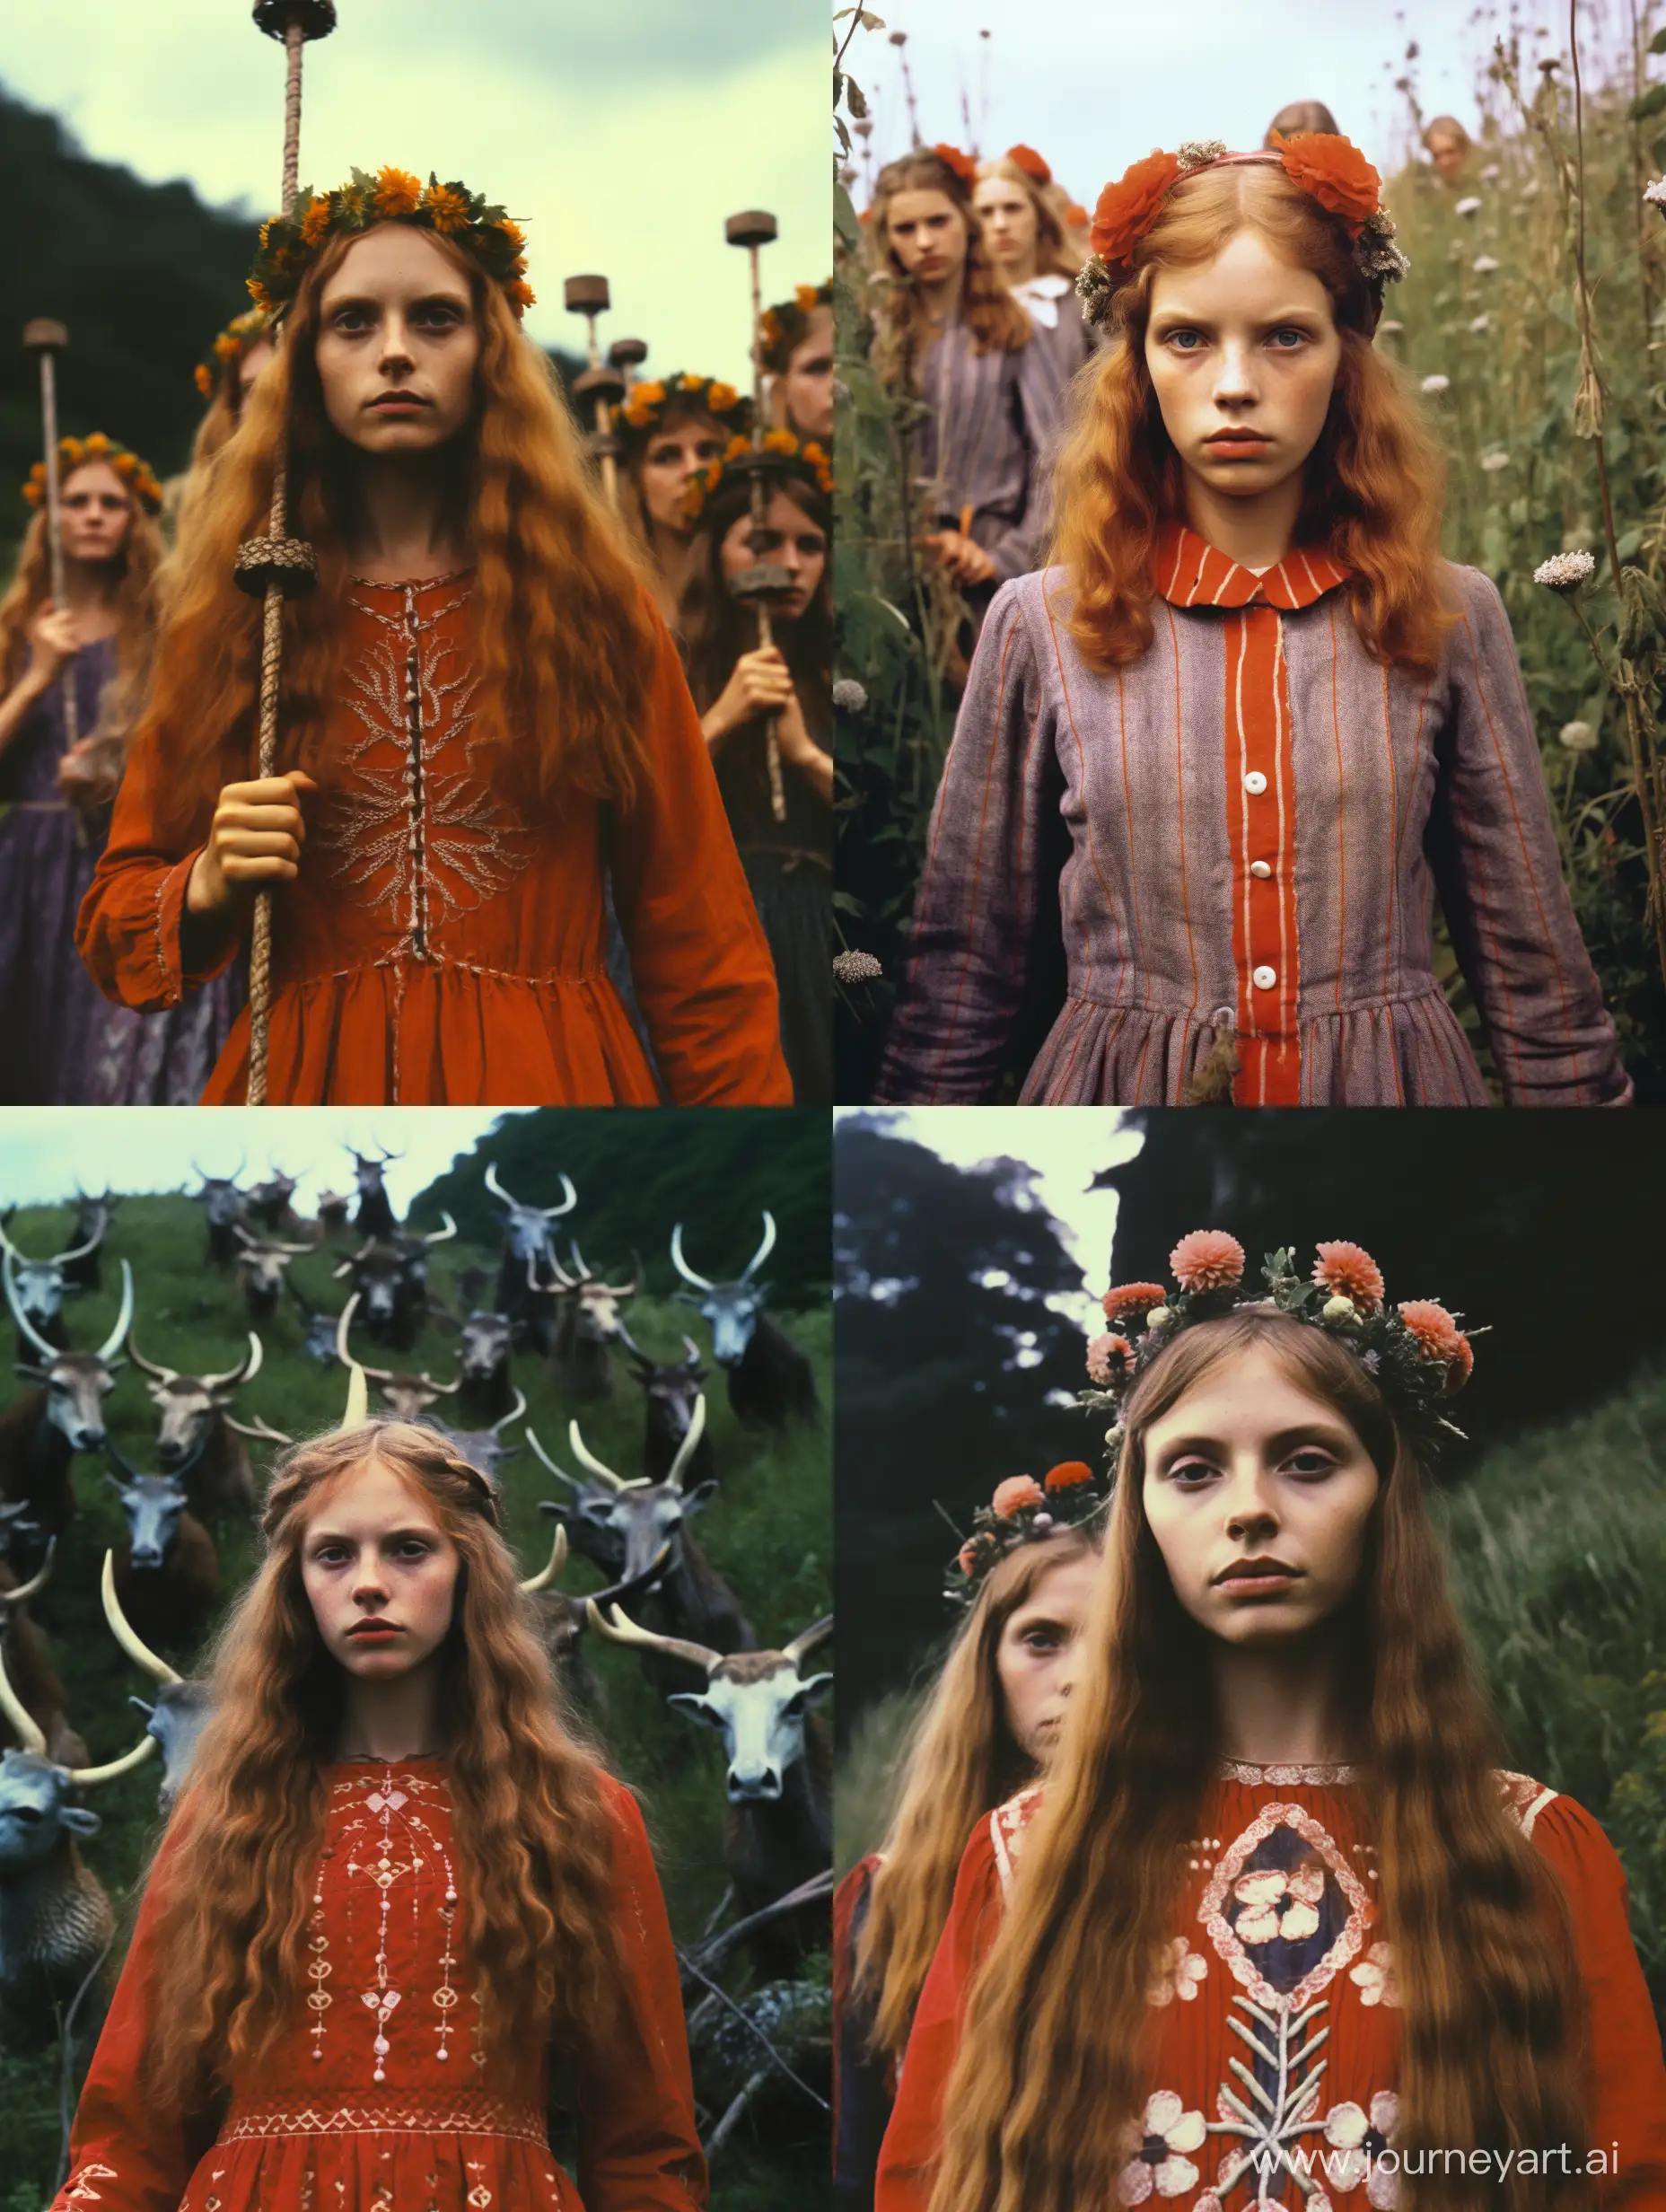 Eerie-1970s-Folk-Horror-Photography-in-British-Rural-Setting